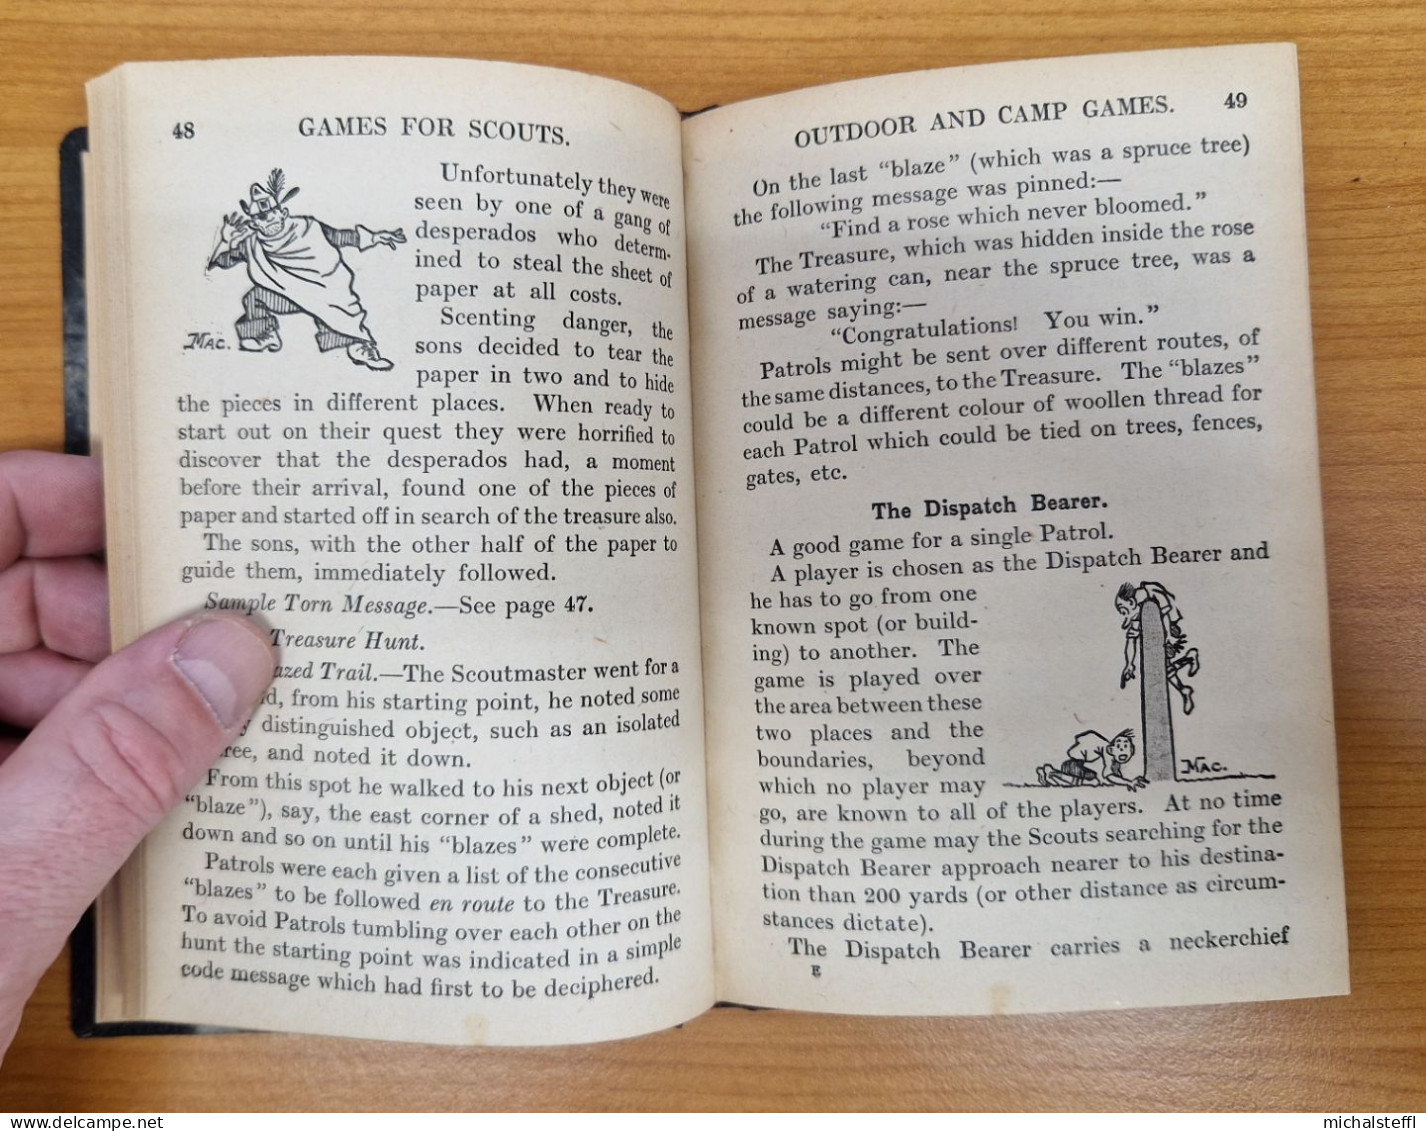 Games for Scouts, Mackenzie, A W N, 1943